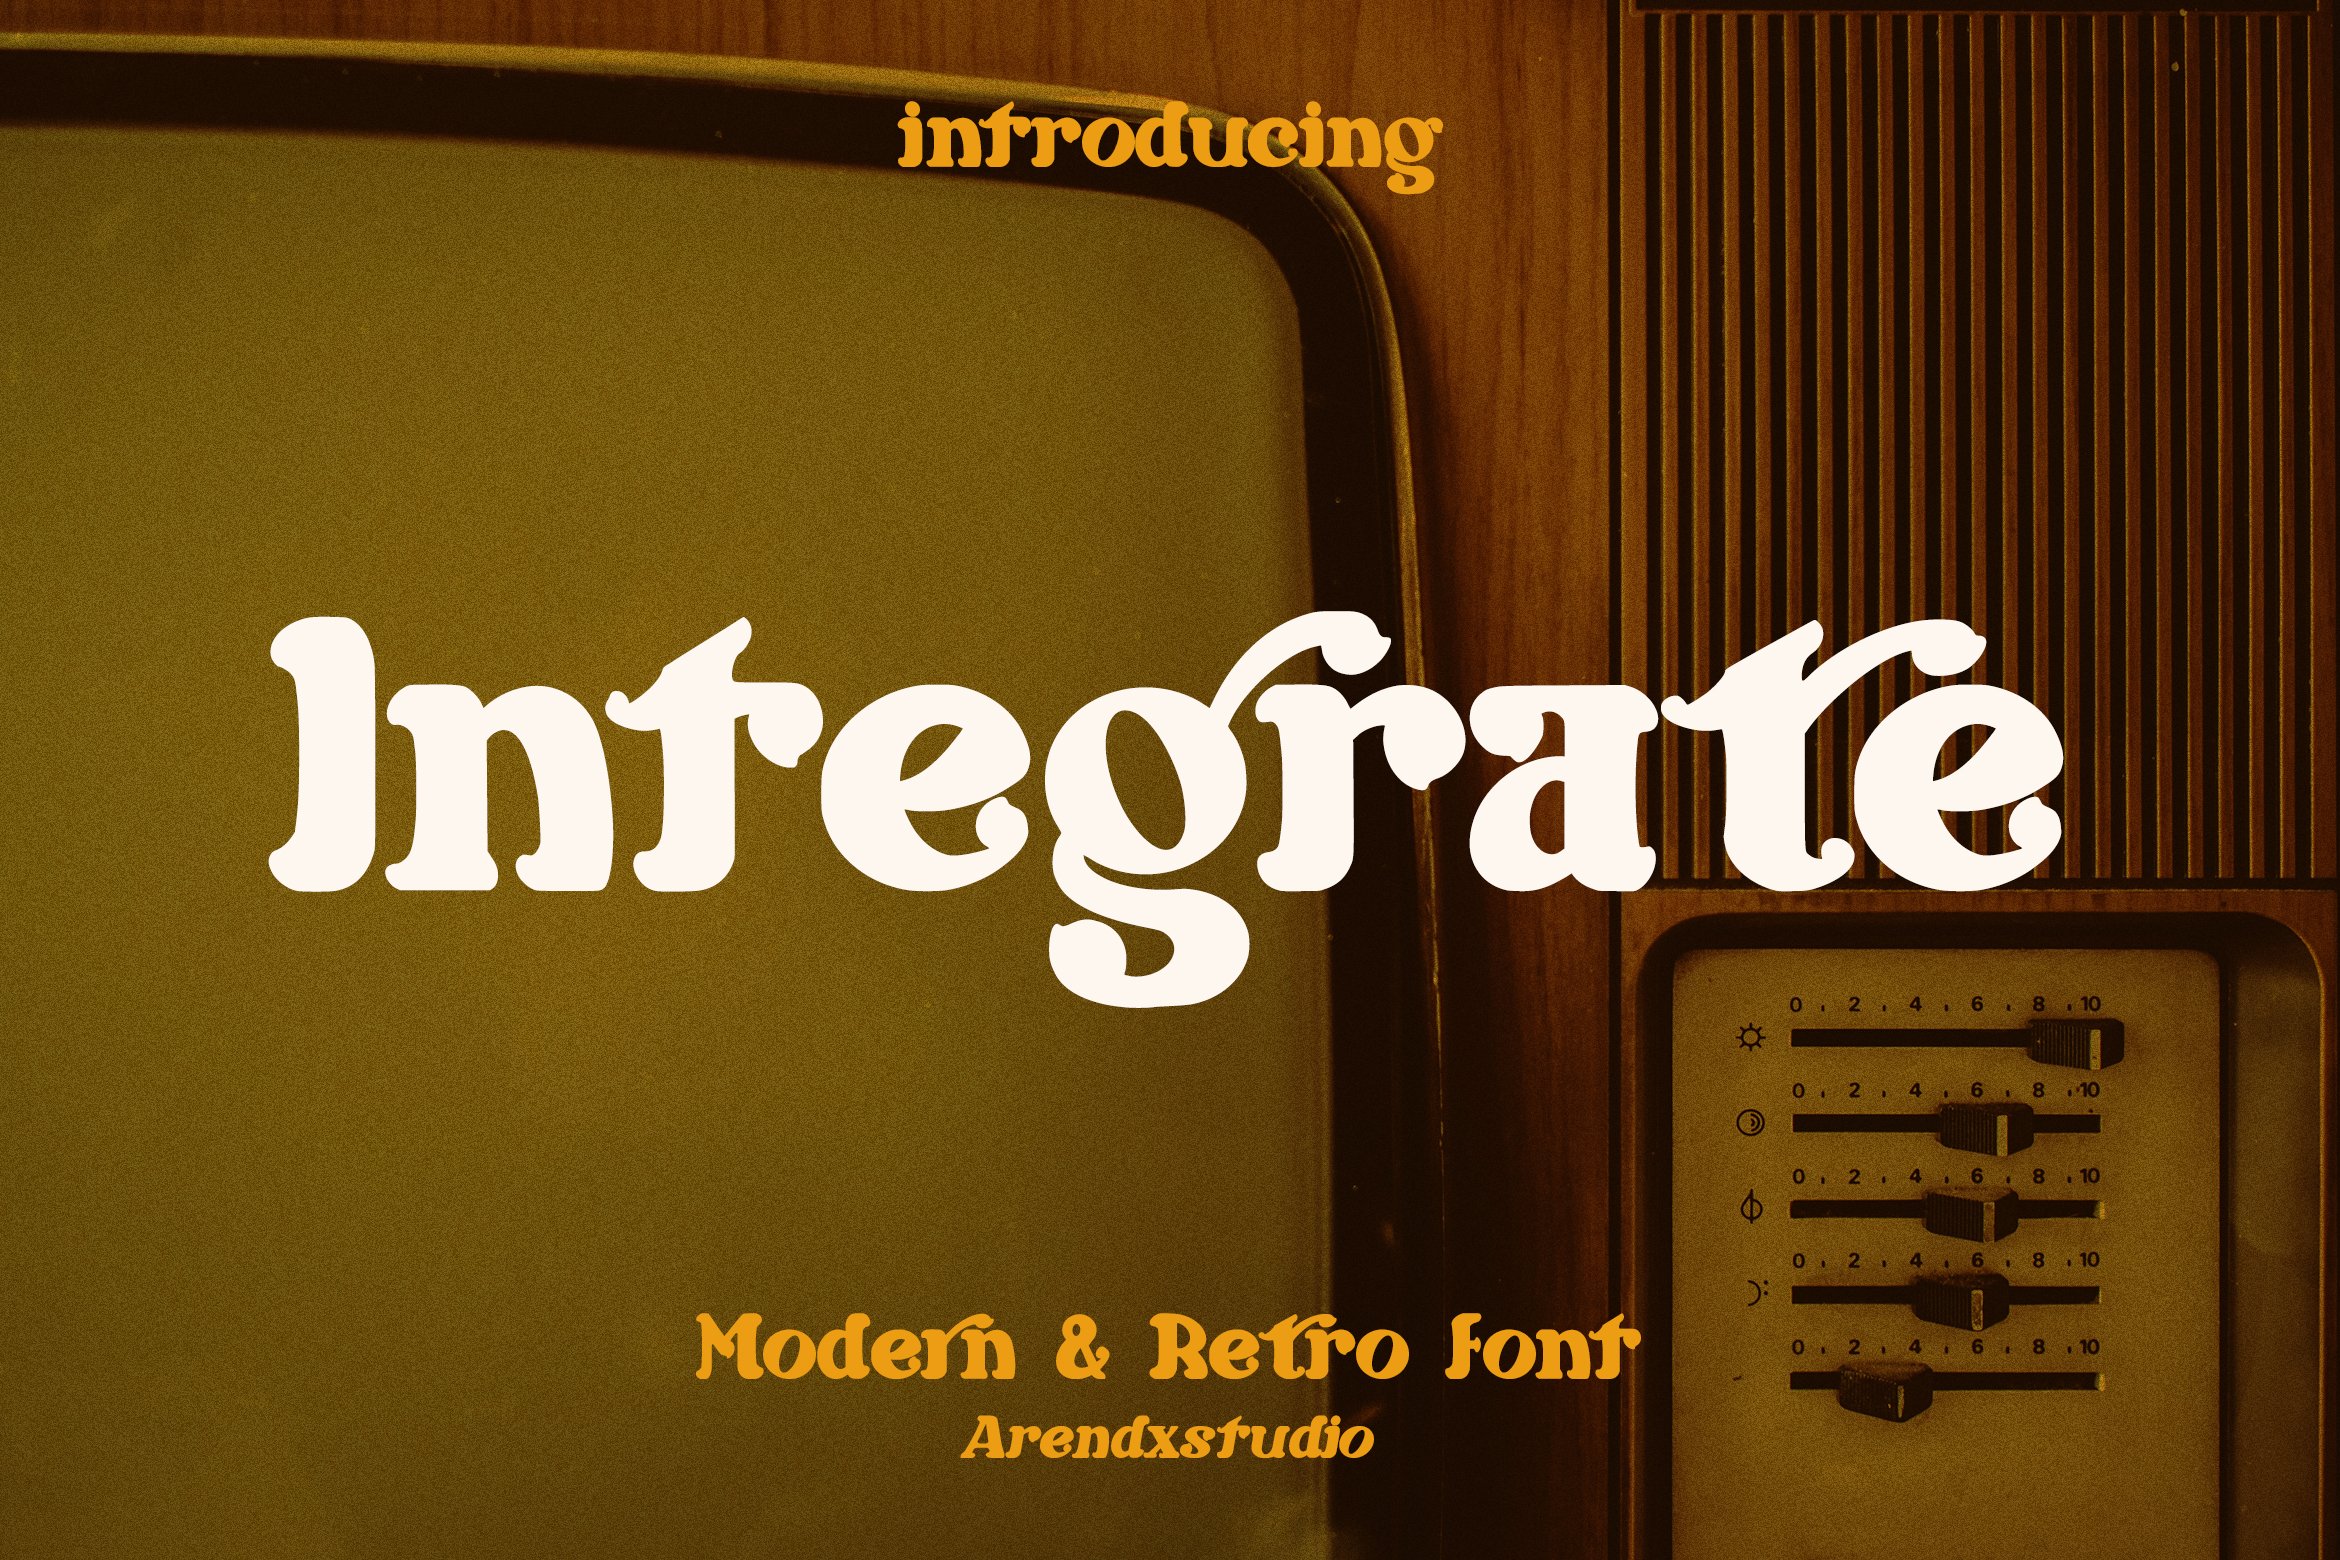 Integrate - Modern & Retro Font cover image.